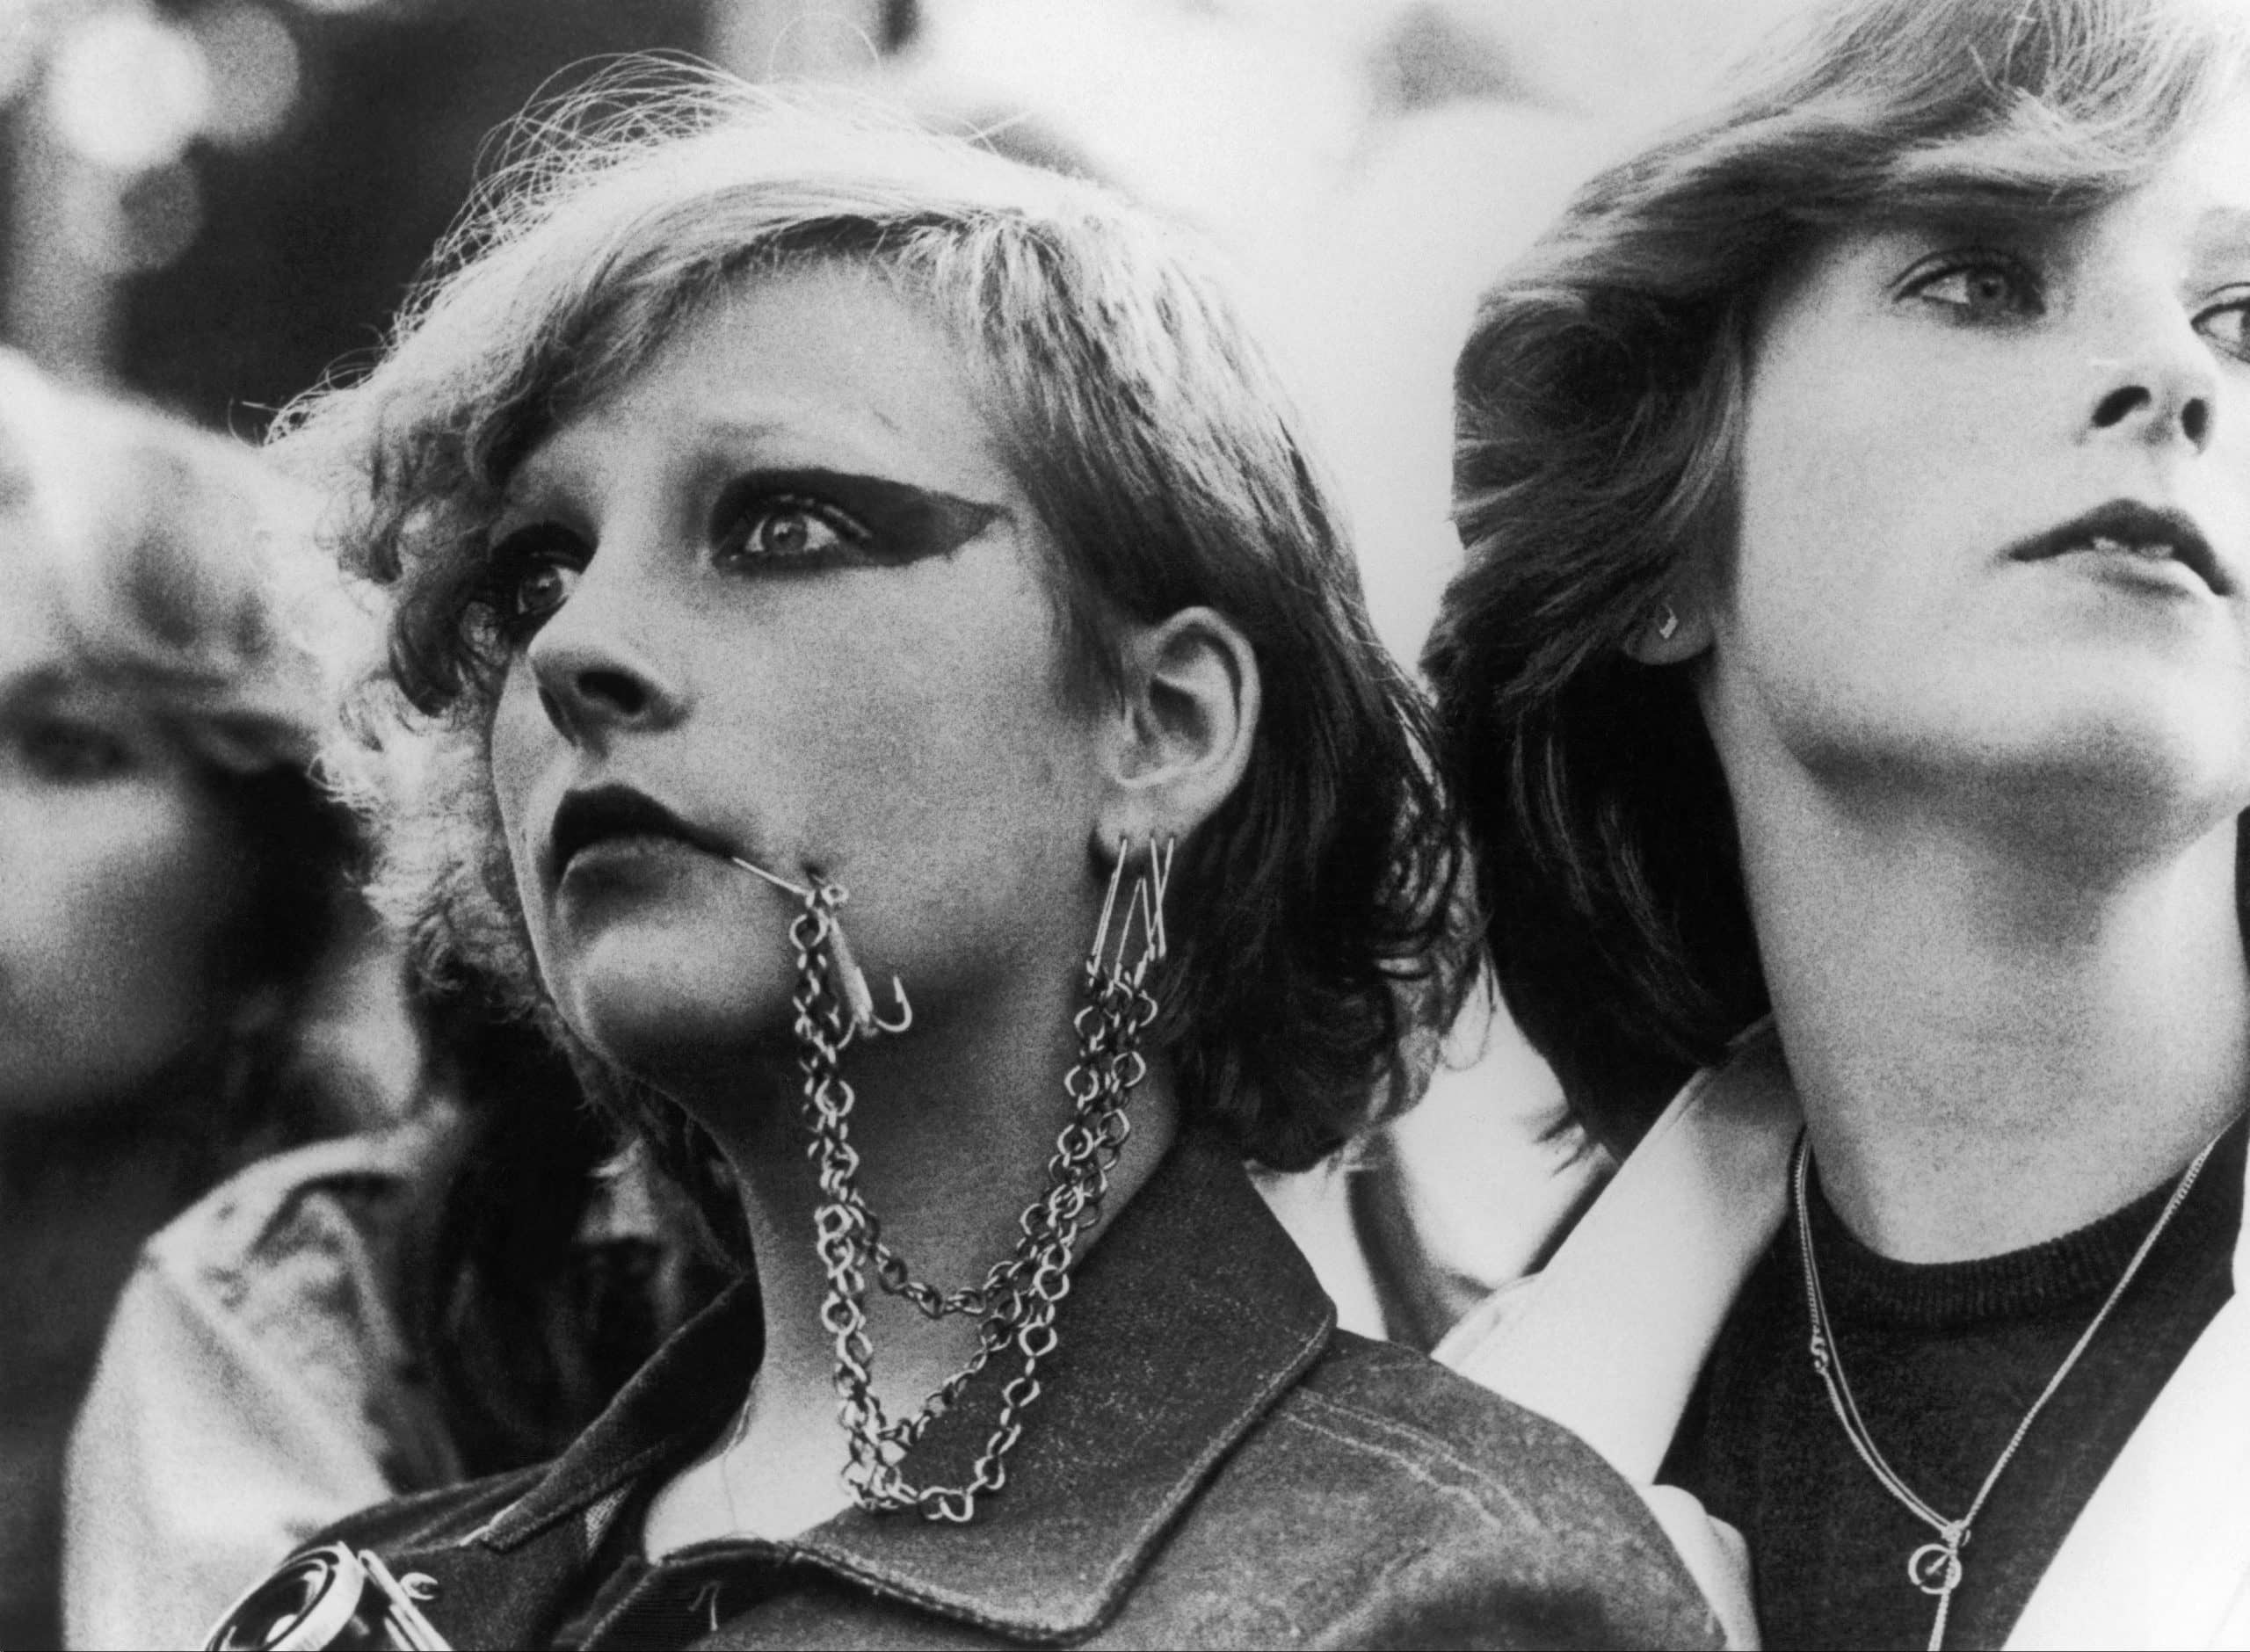 body piercing in 1970s punk fashion